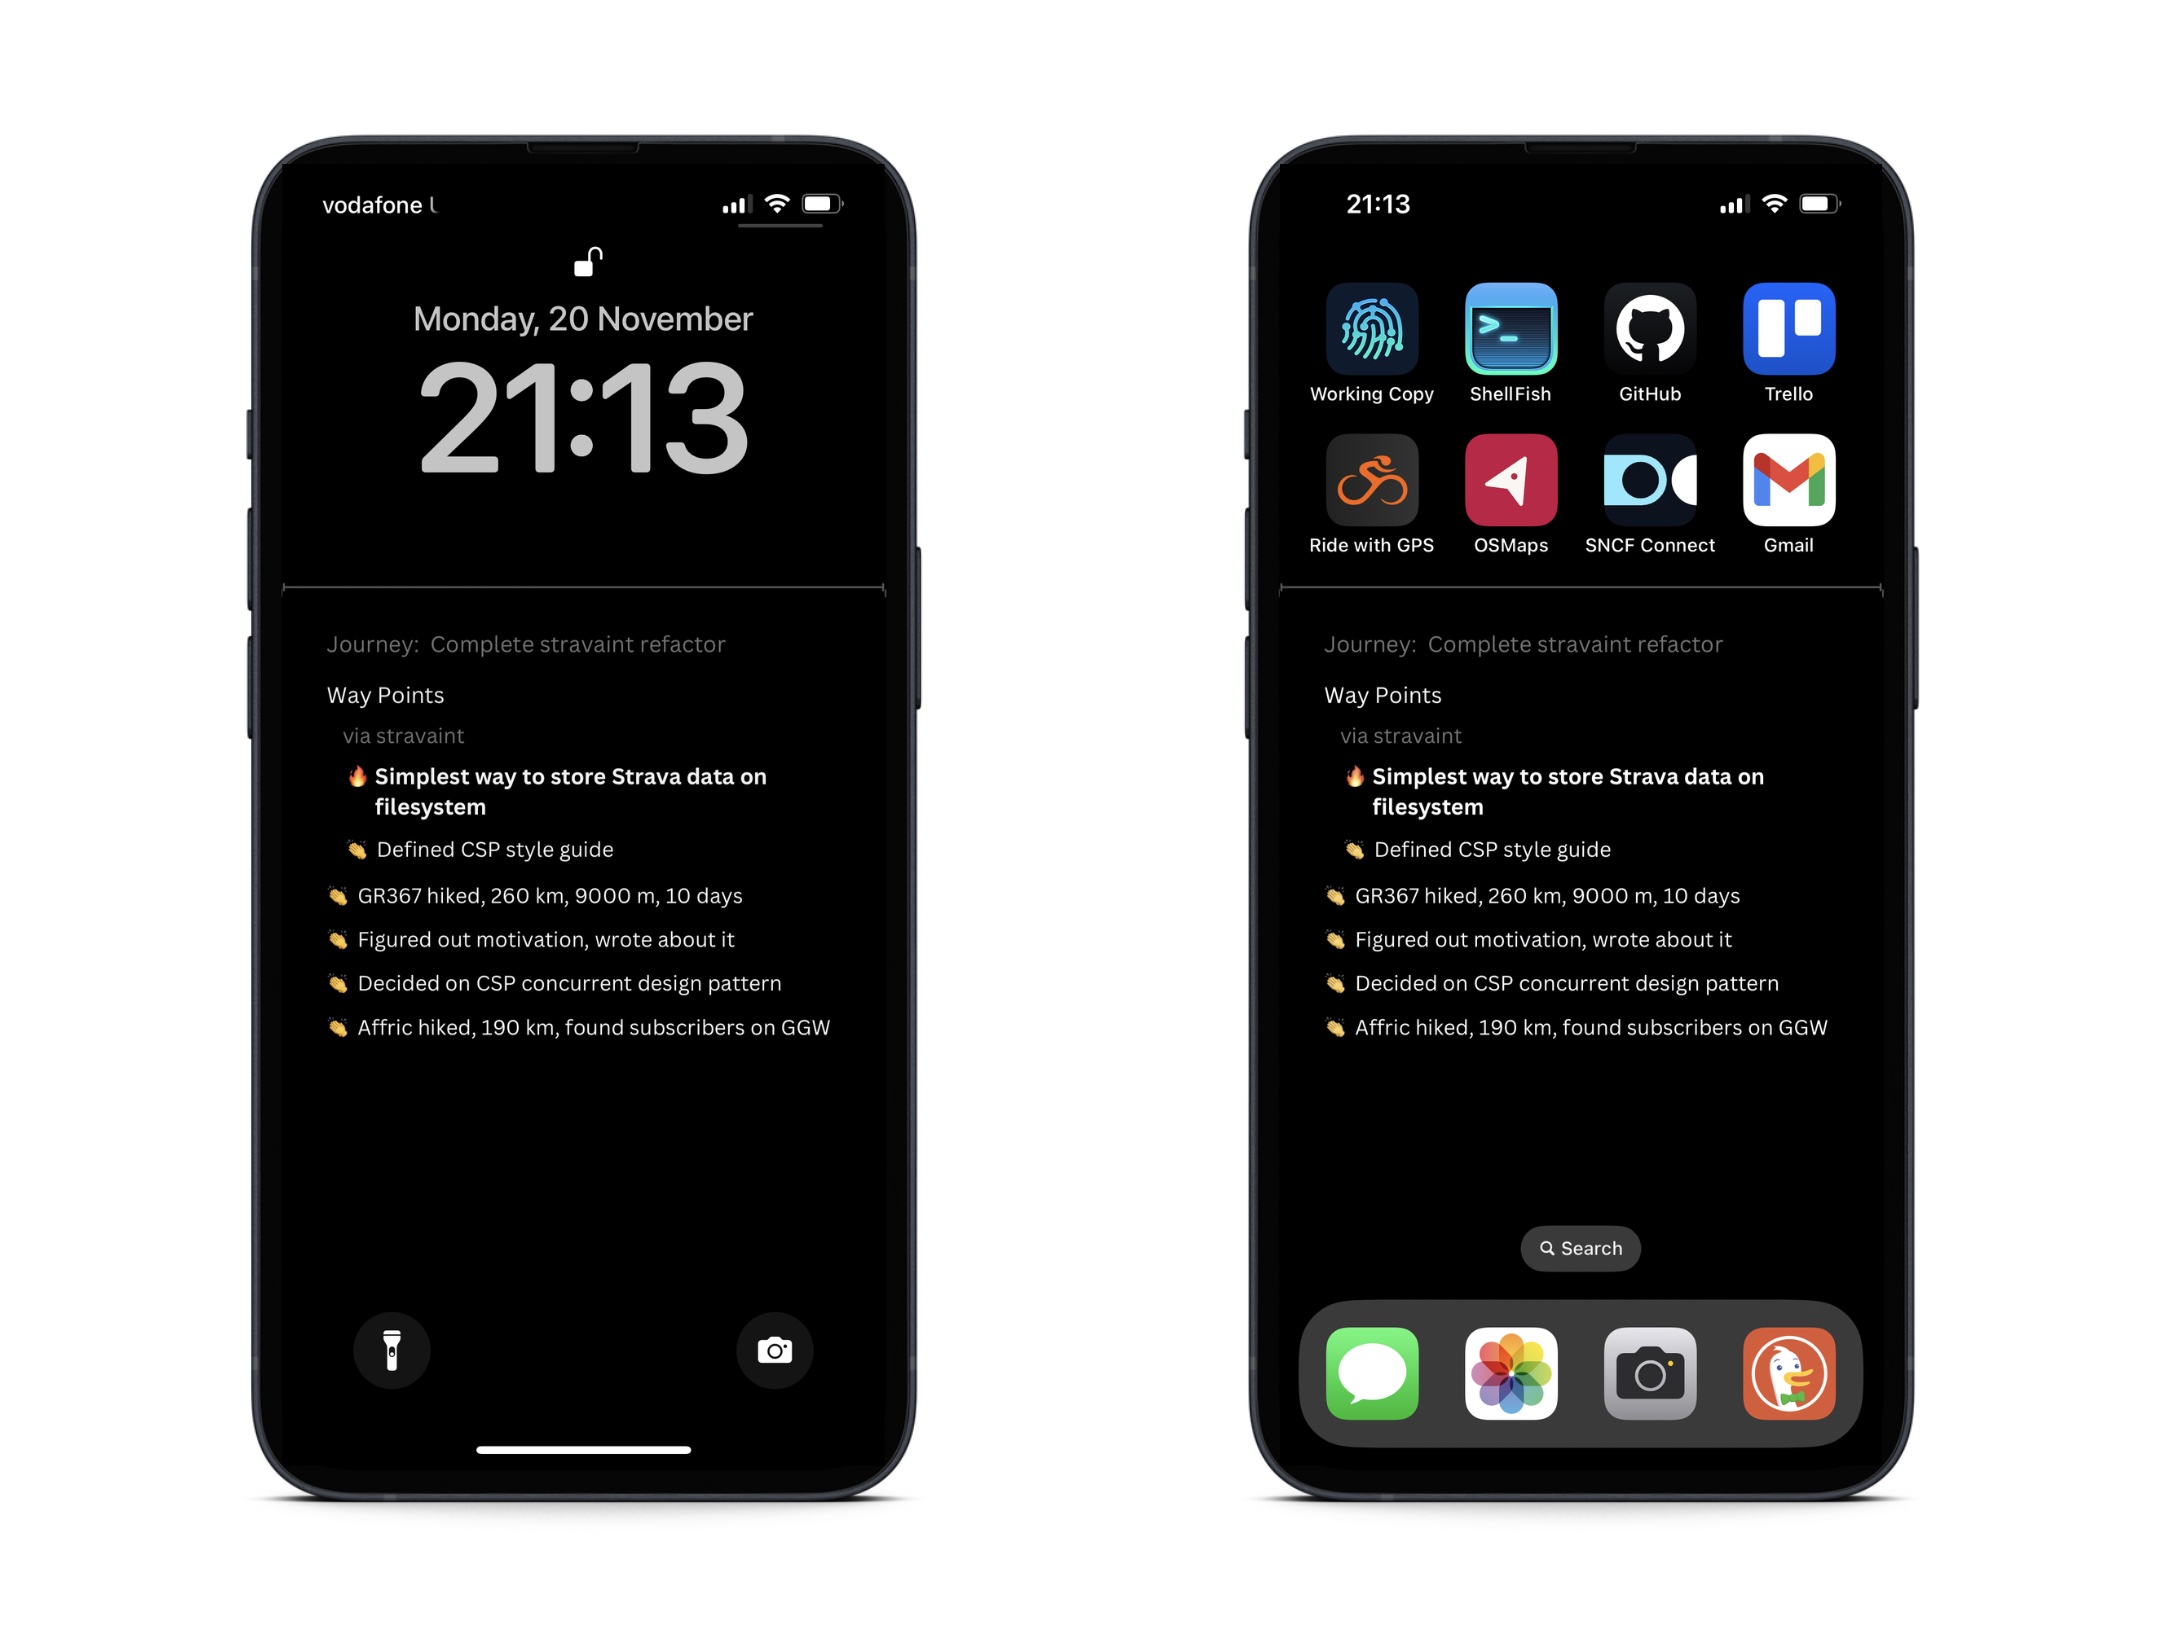 Screenshots of iphone with espresso framework wallpaper